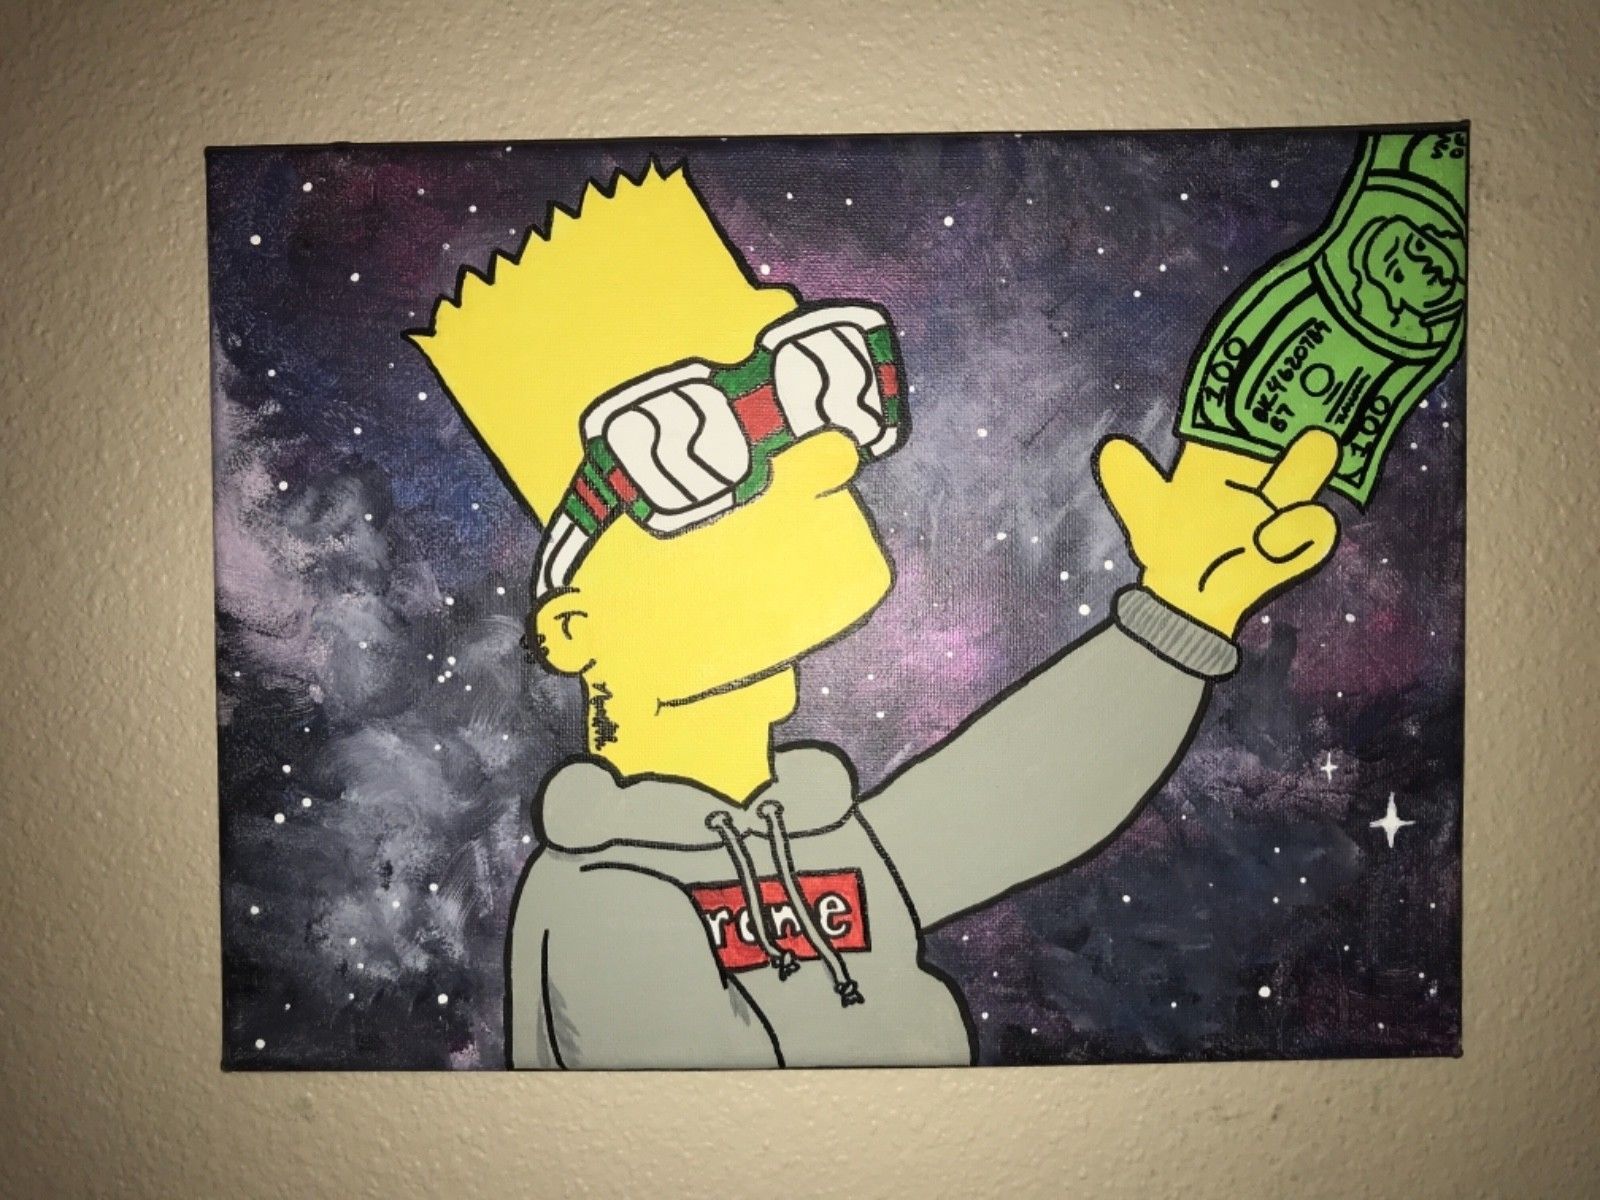 Bart Simpson Gangster Wallpapers On Wallpaperdog